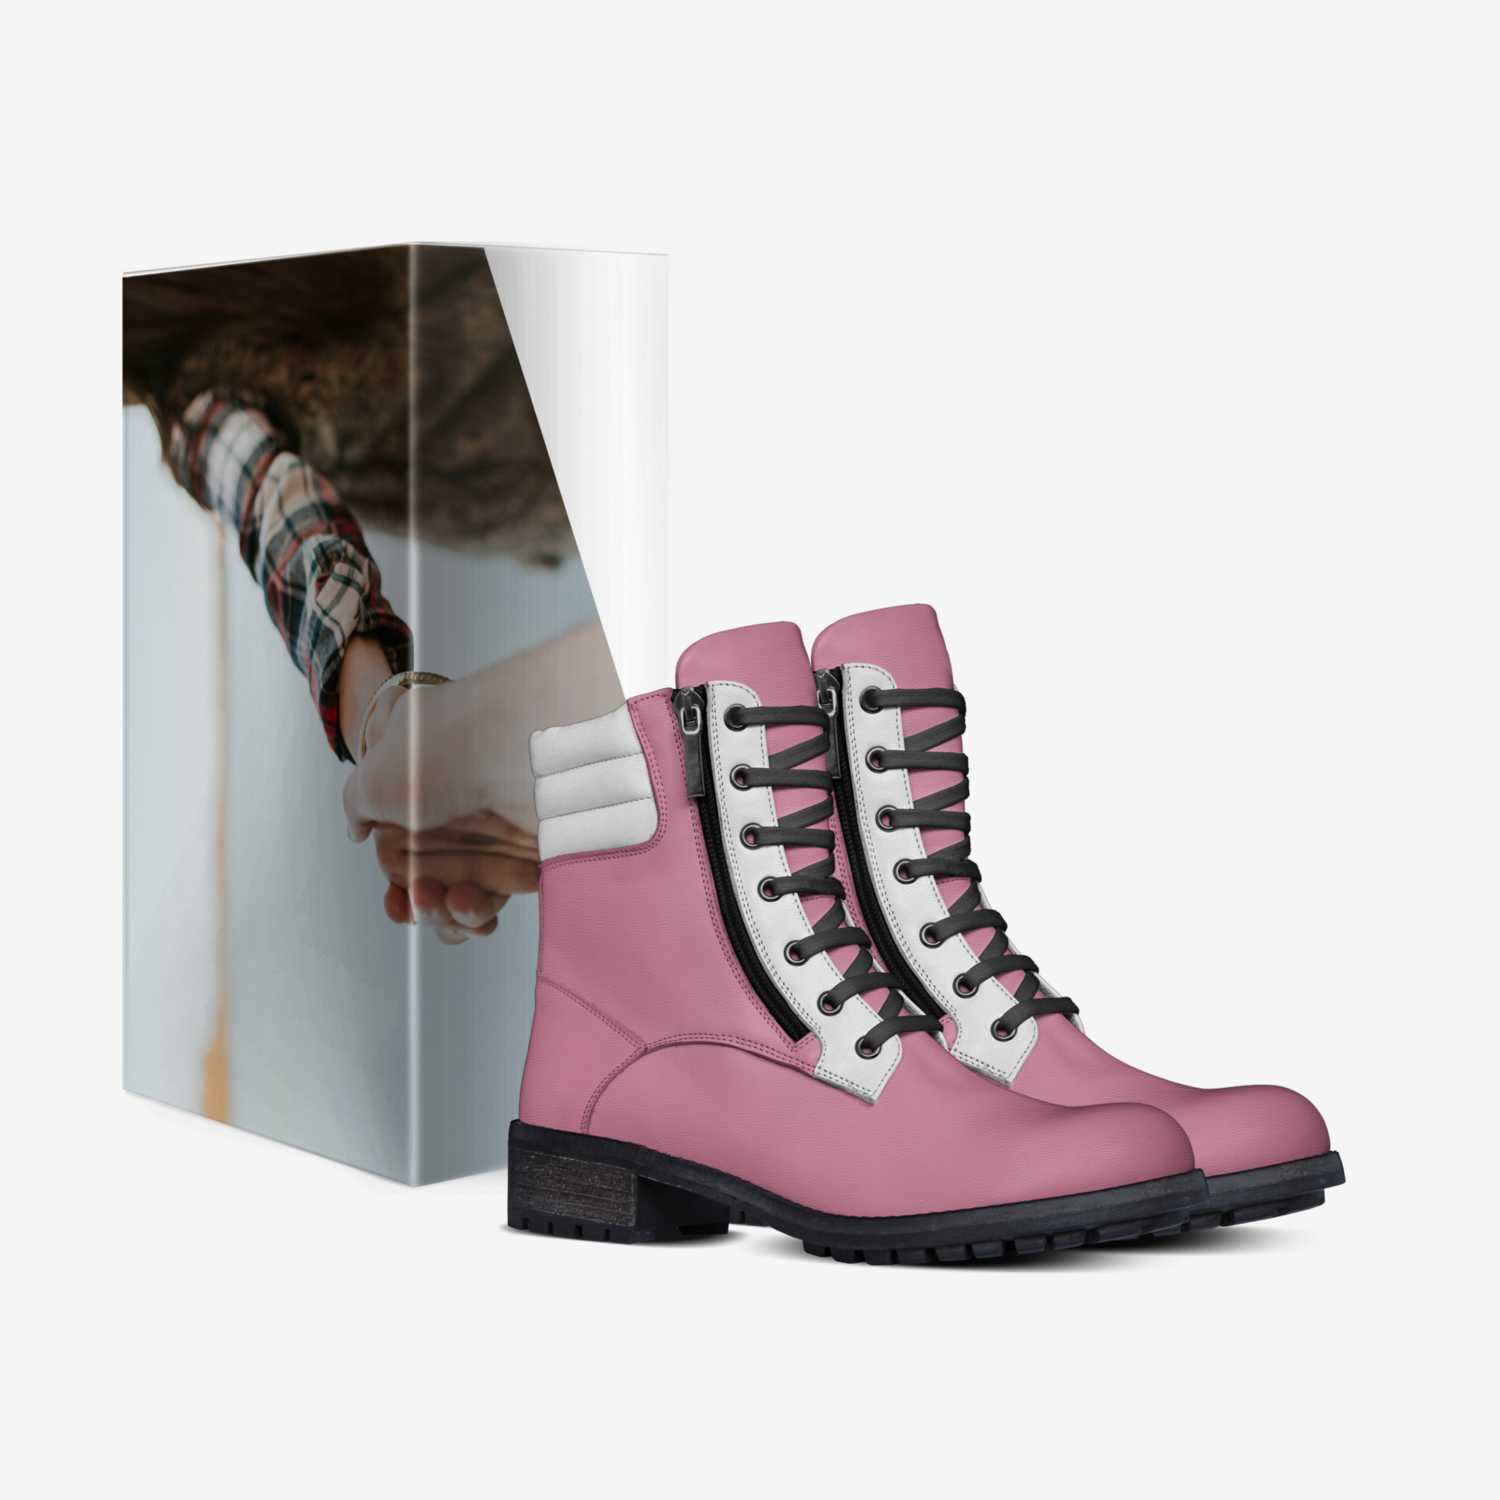 Daring Damsel custom made in Italy shoes by Jarett Lopez | Box view